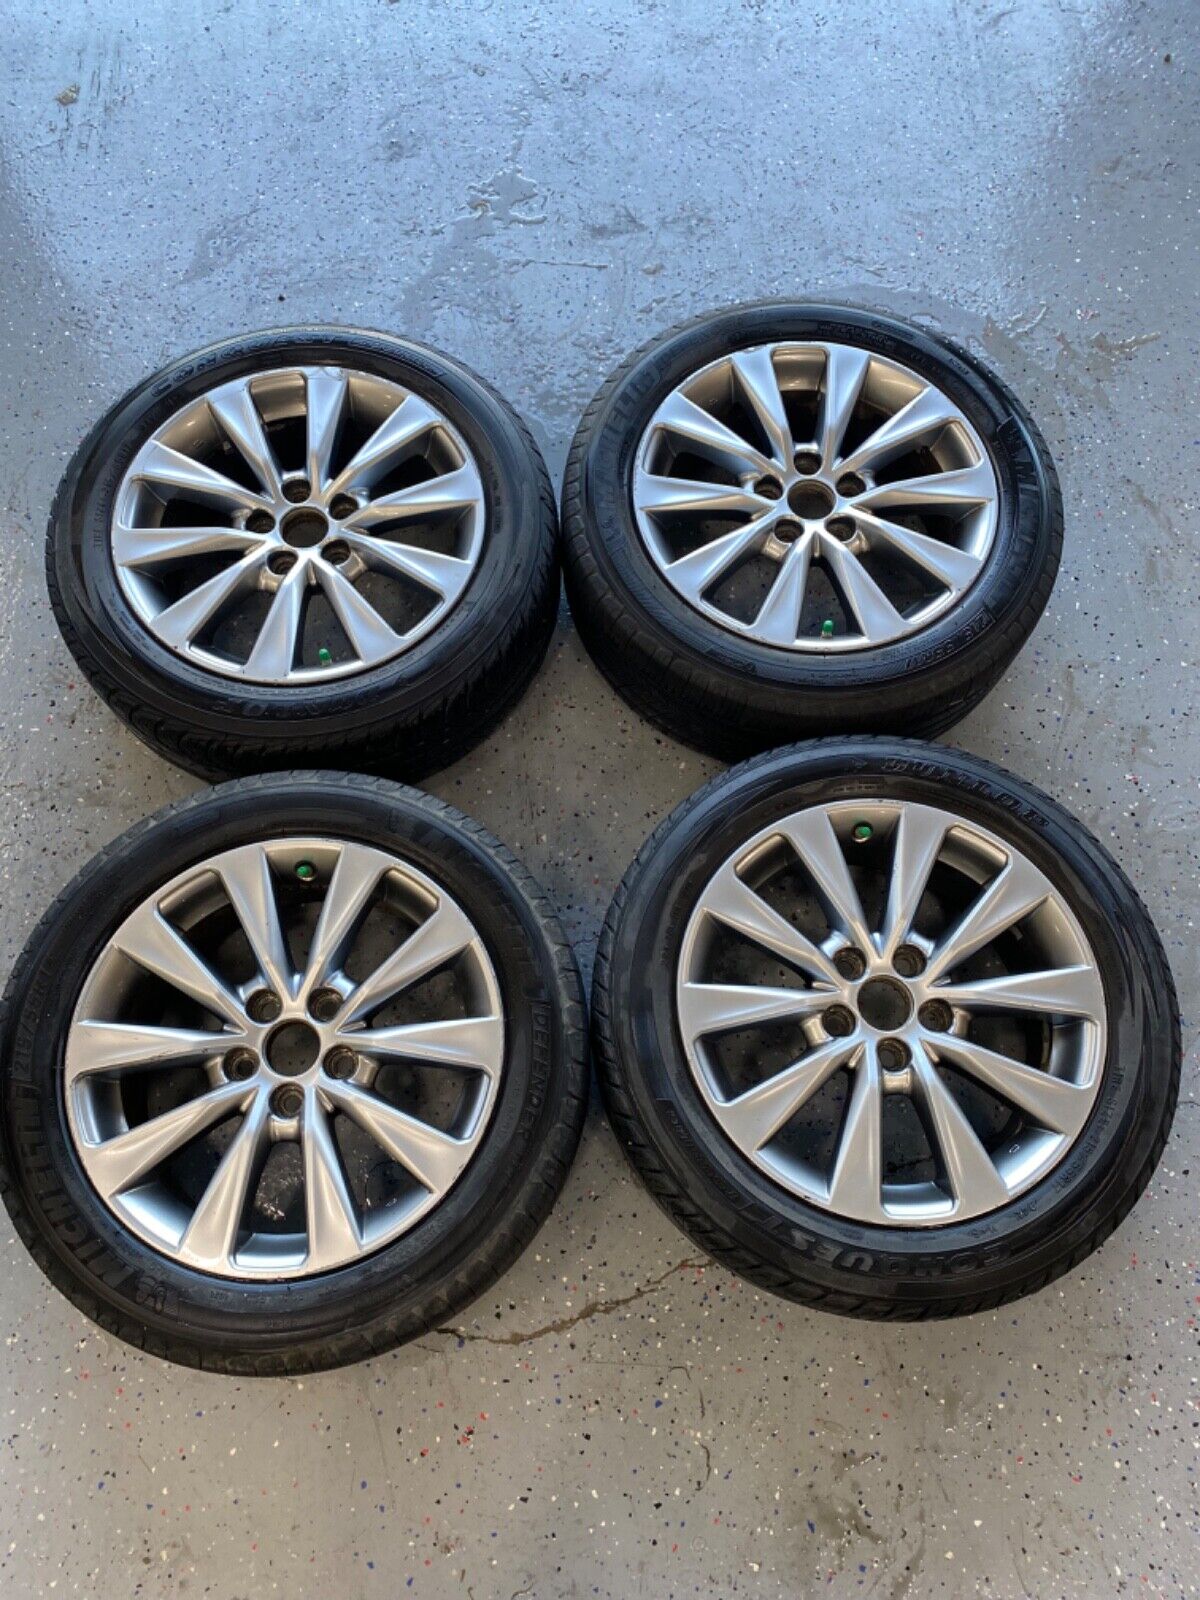 Set 2015 2016 2017 Toyota Camry OEM Dark Wheels 17 inch Rims With 215\55R17 Tire